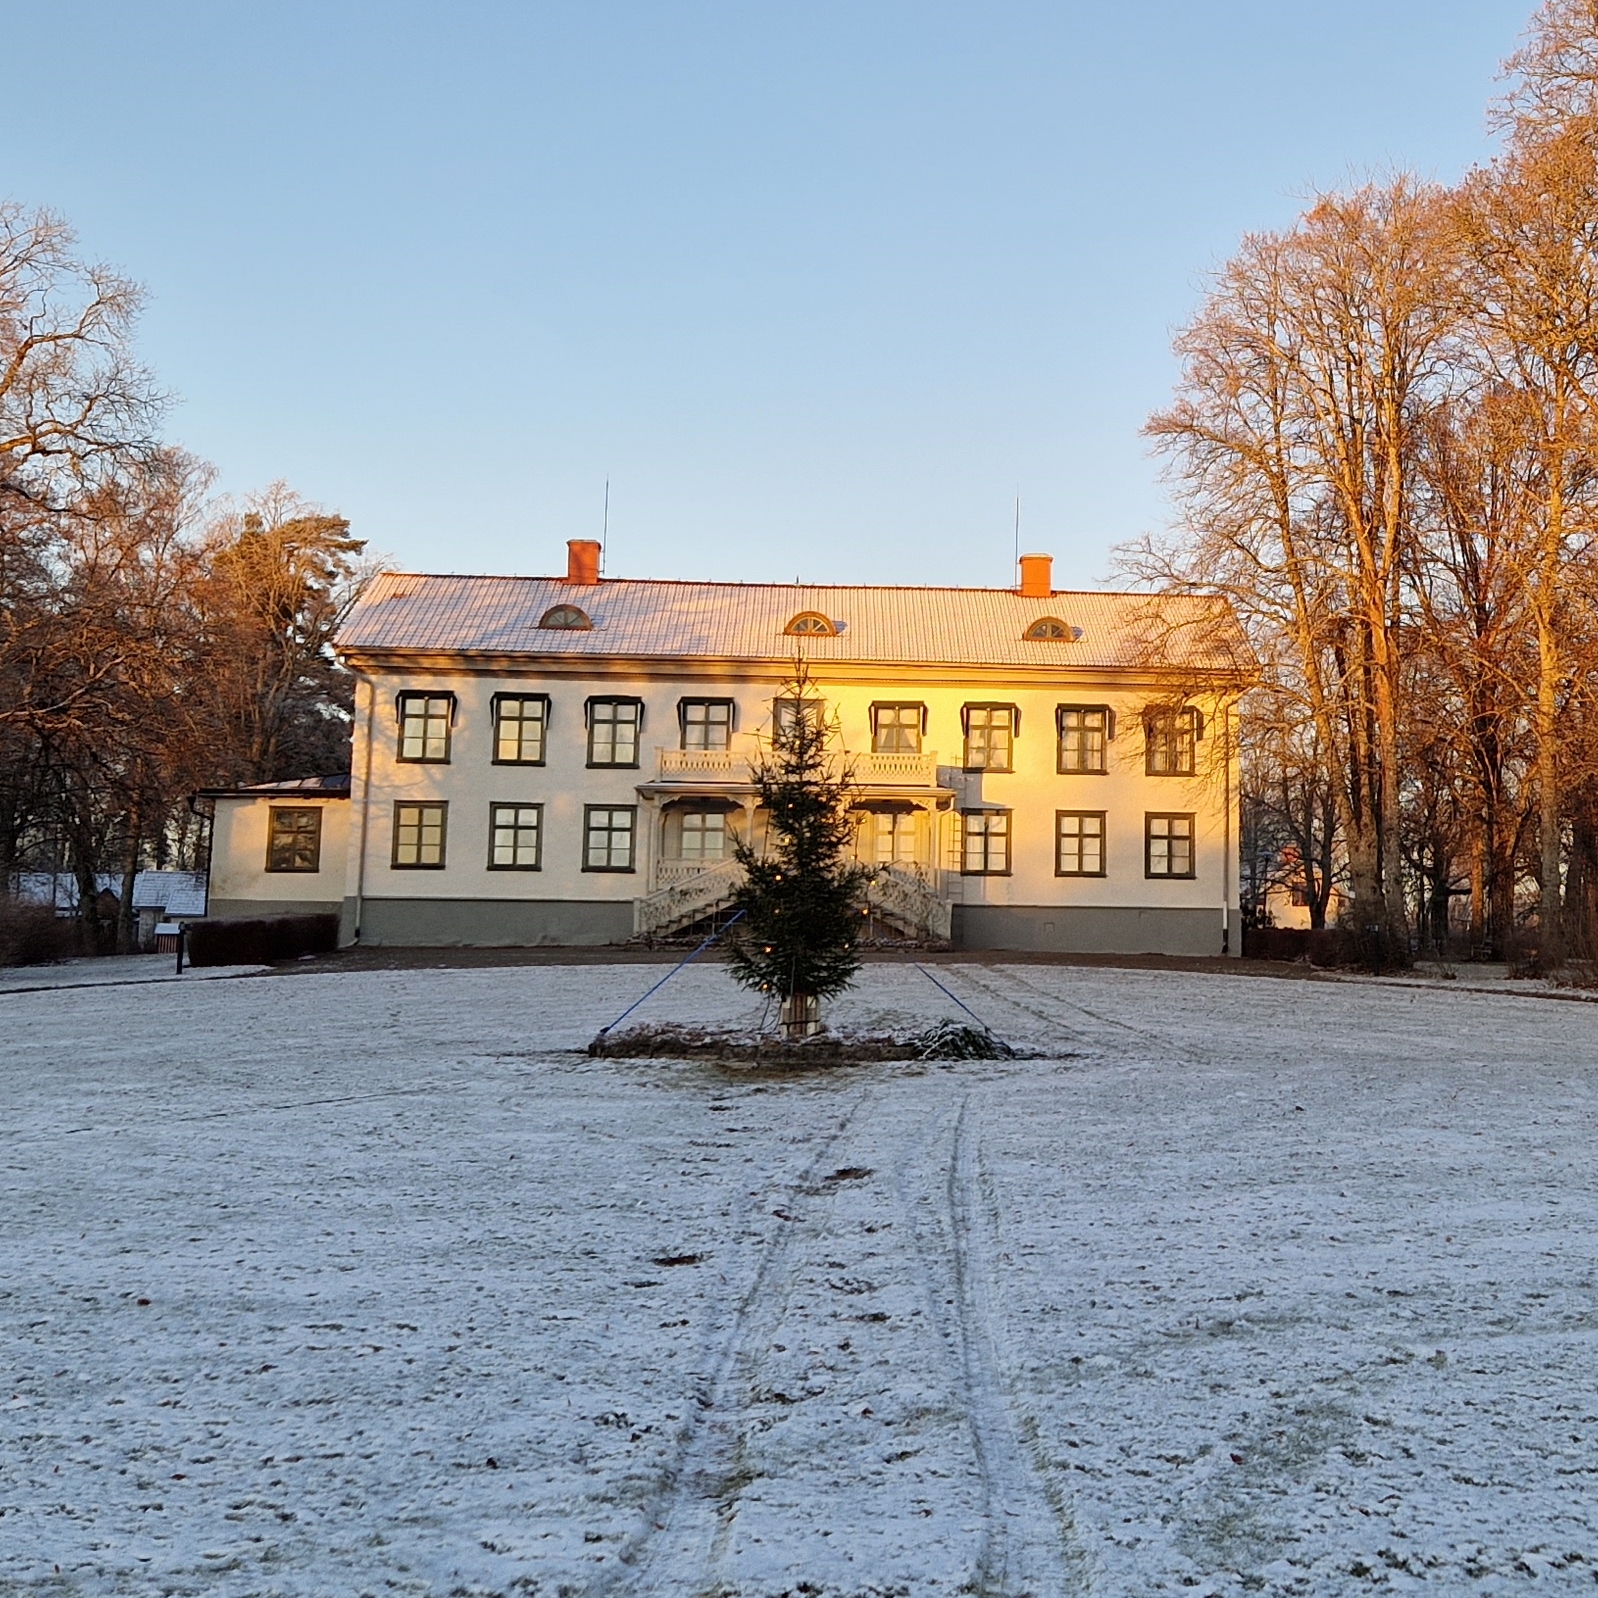 Björkborn manor in winter.